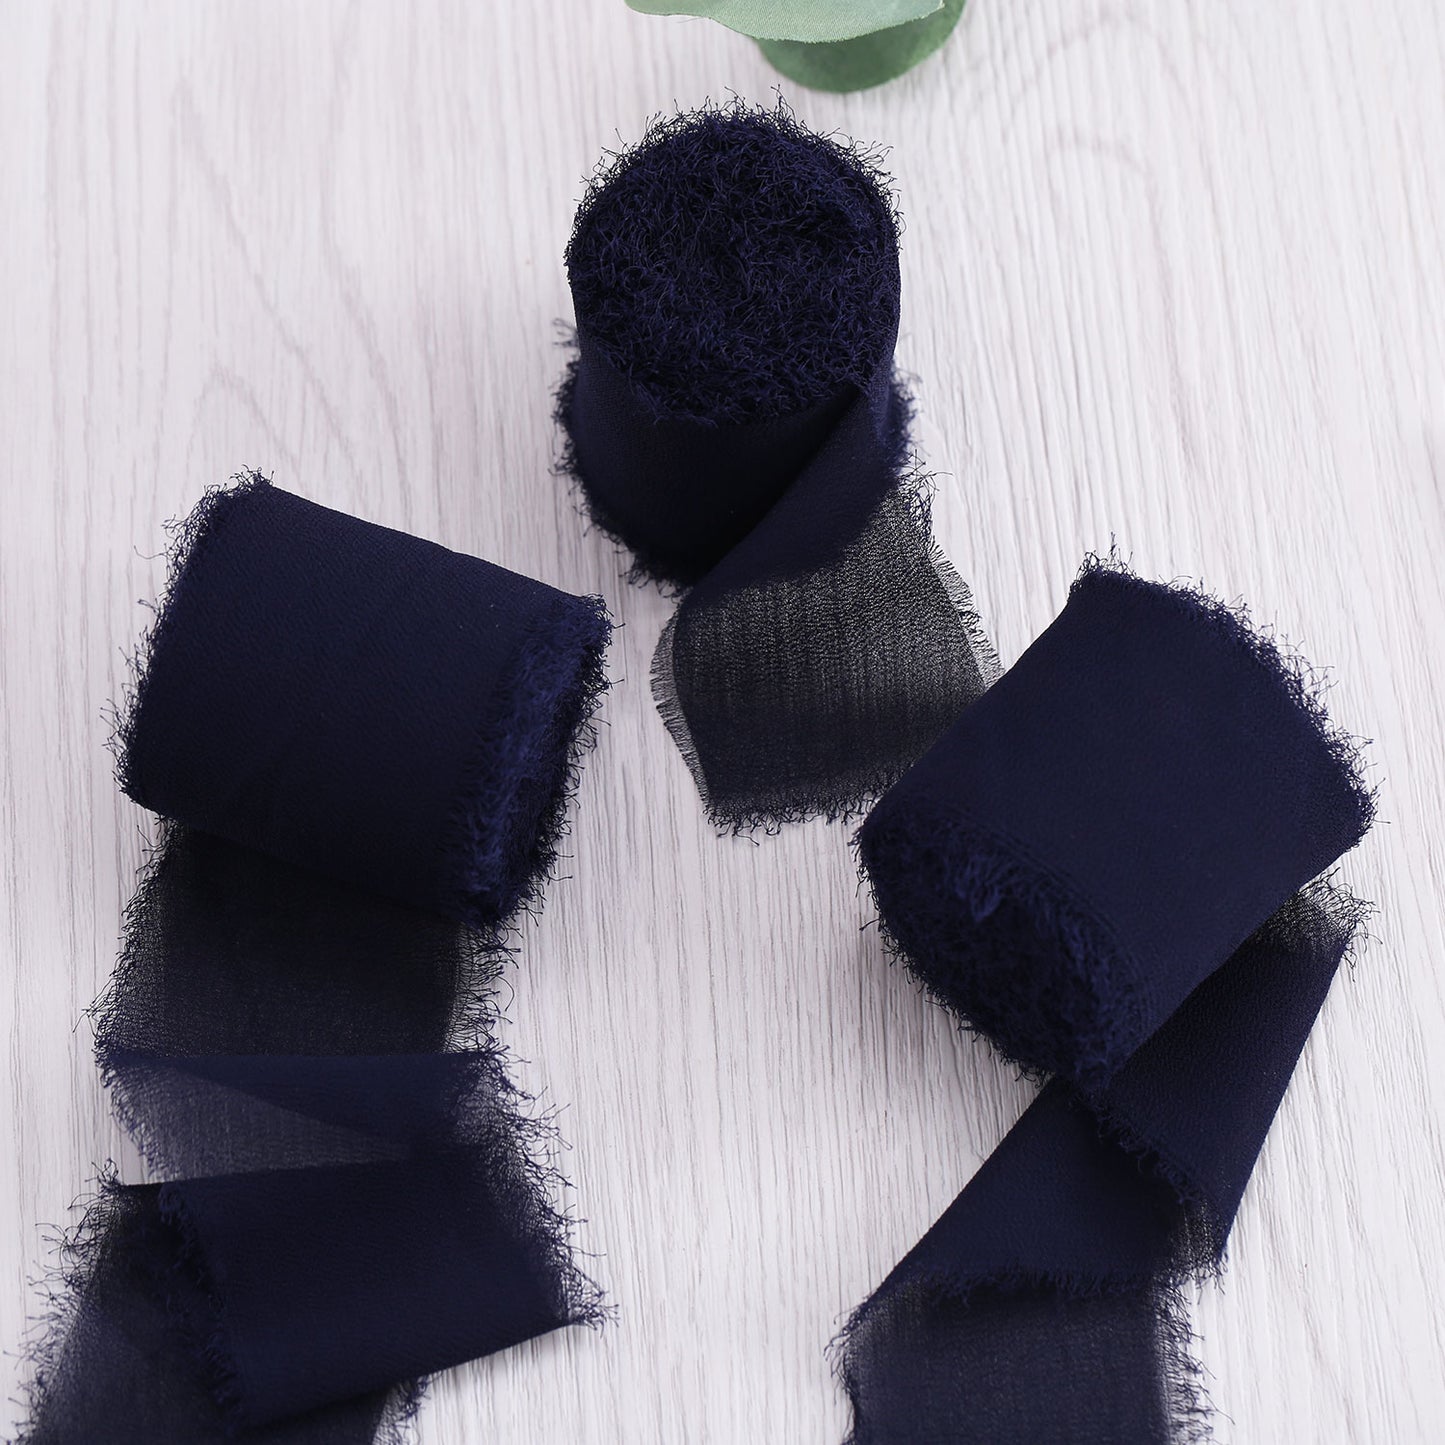 Handmade Fringe Chiffon Silk-Like Ribbon 2" x 7Yd Set of 3 Rolls Ribbons for Wedding Invitations, Bouquets, Gift Wrapping (3 Rolls Dark Navy Blue)